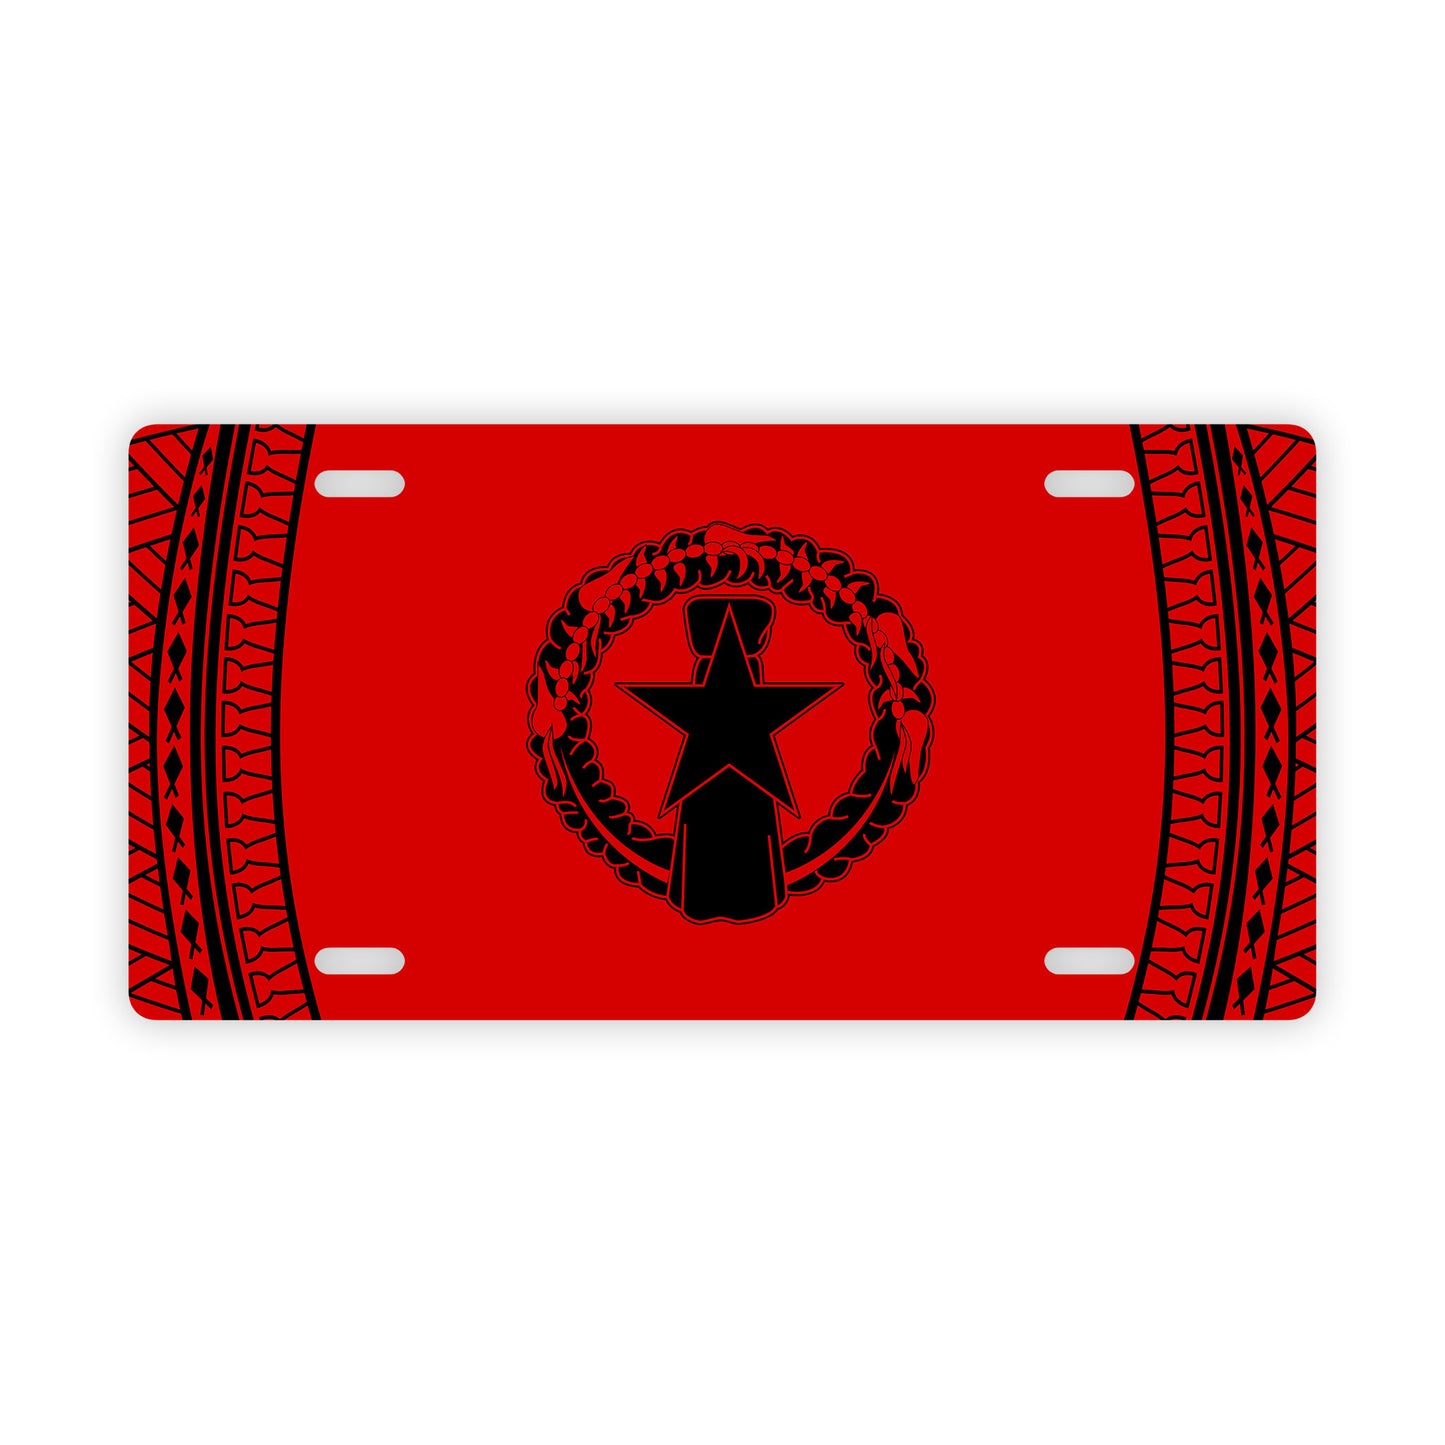 CNMI Tribal Saipan Tinian Rota Red Car License Plate